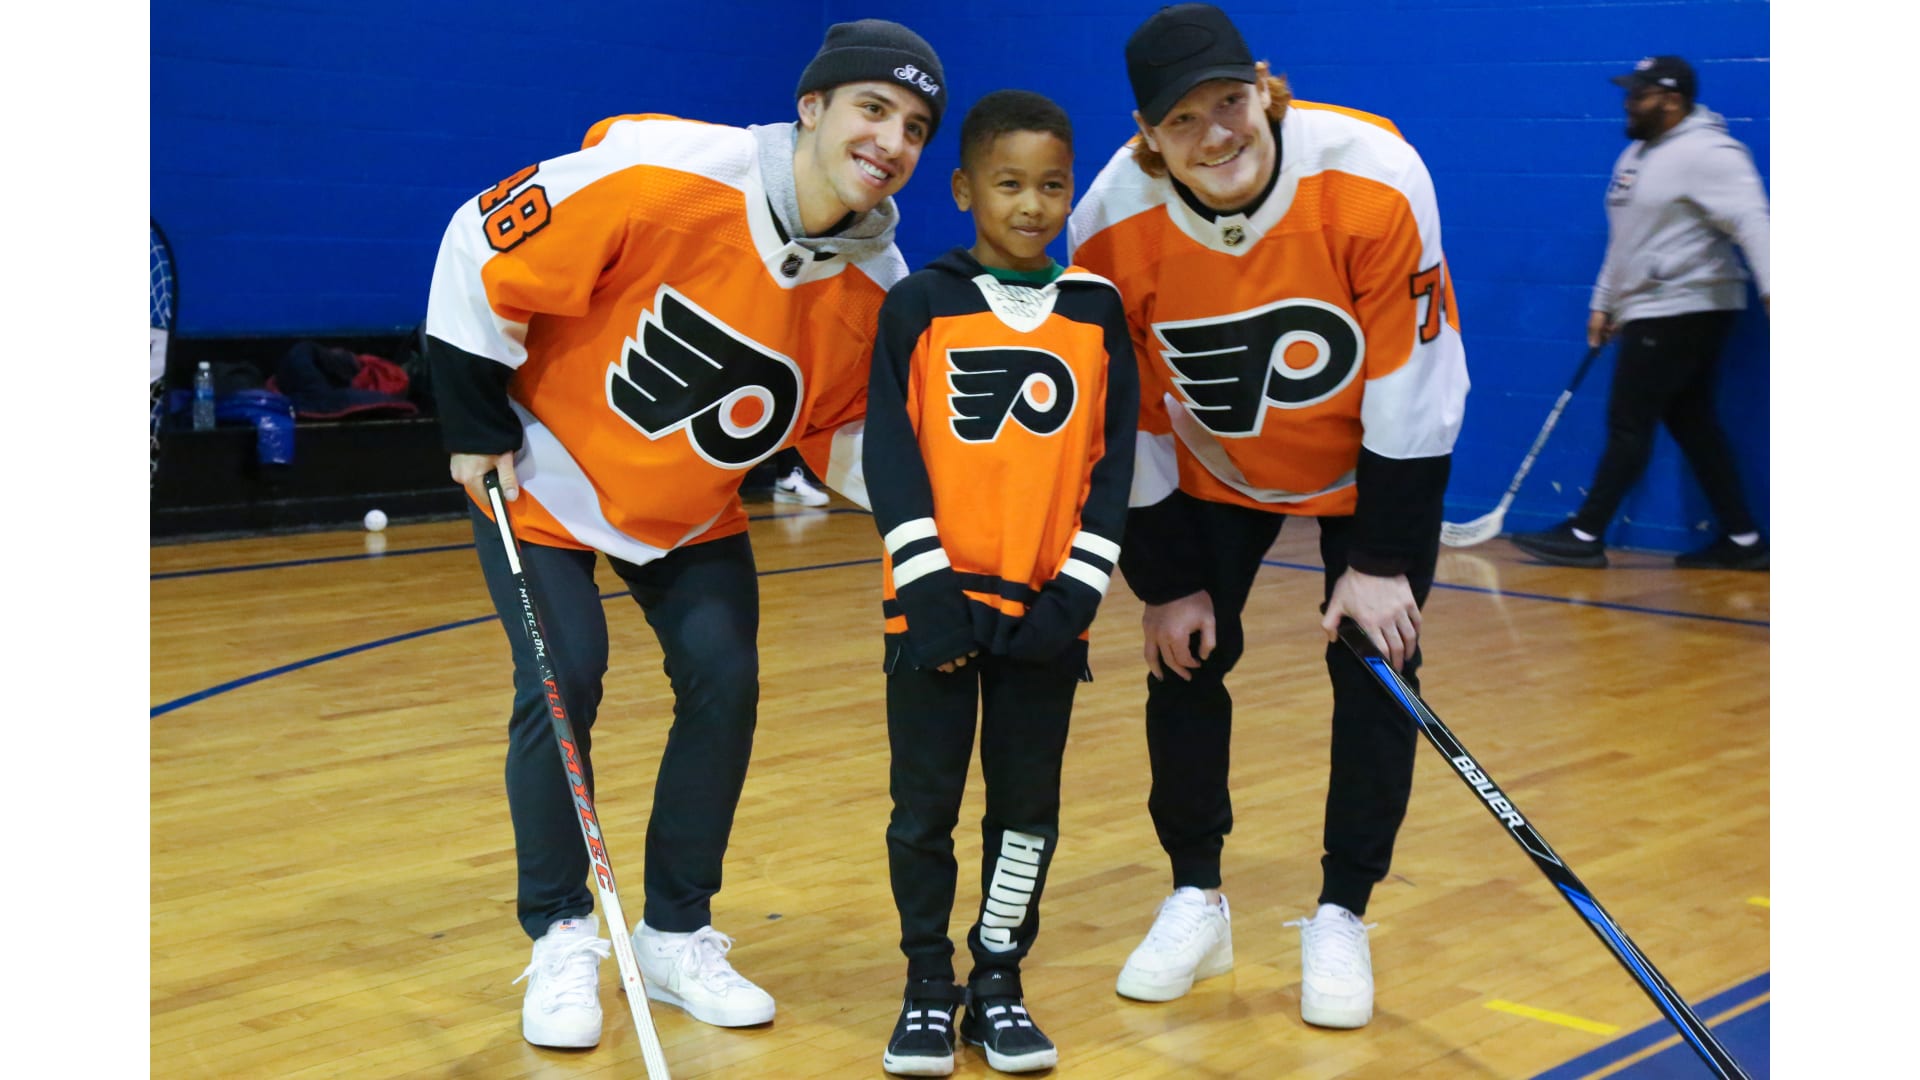 Community, Philadelphia Flyers